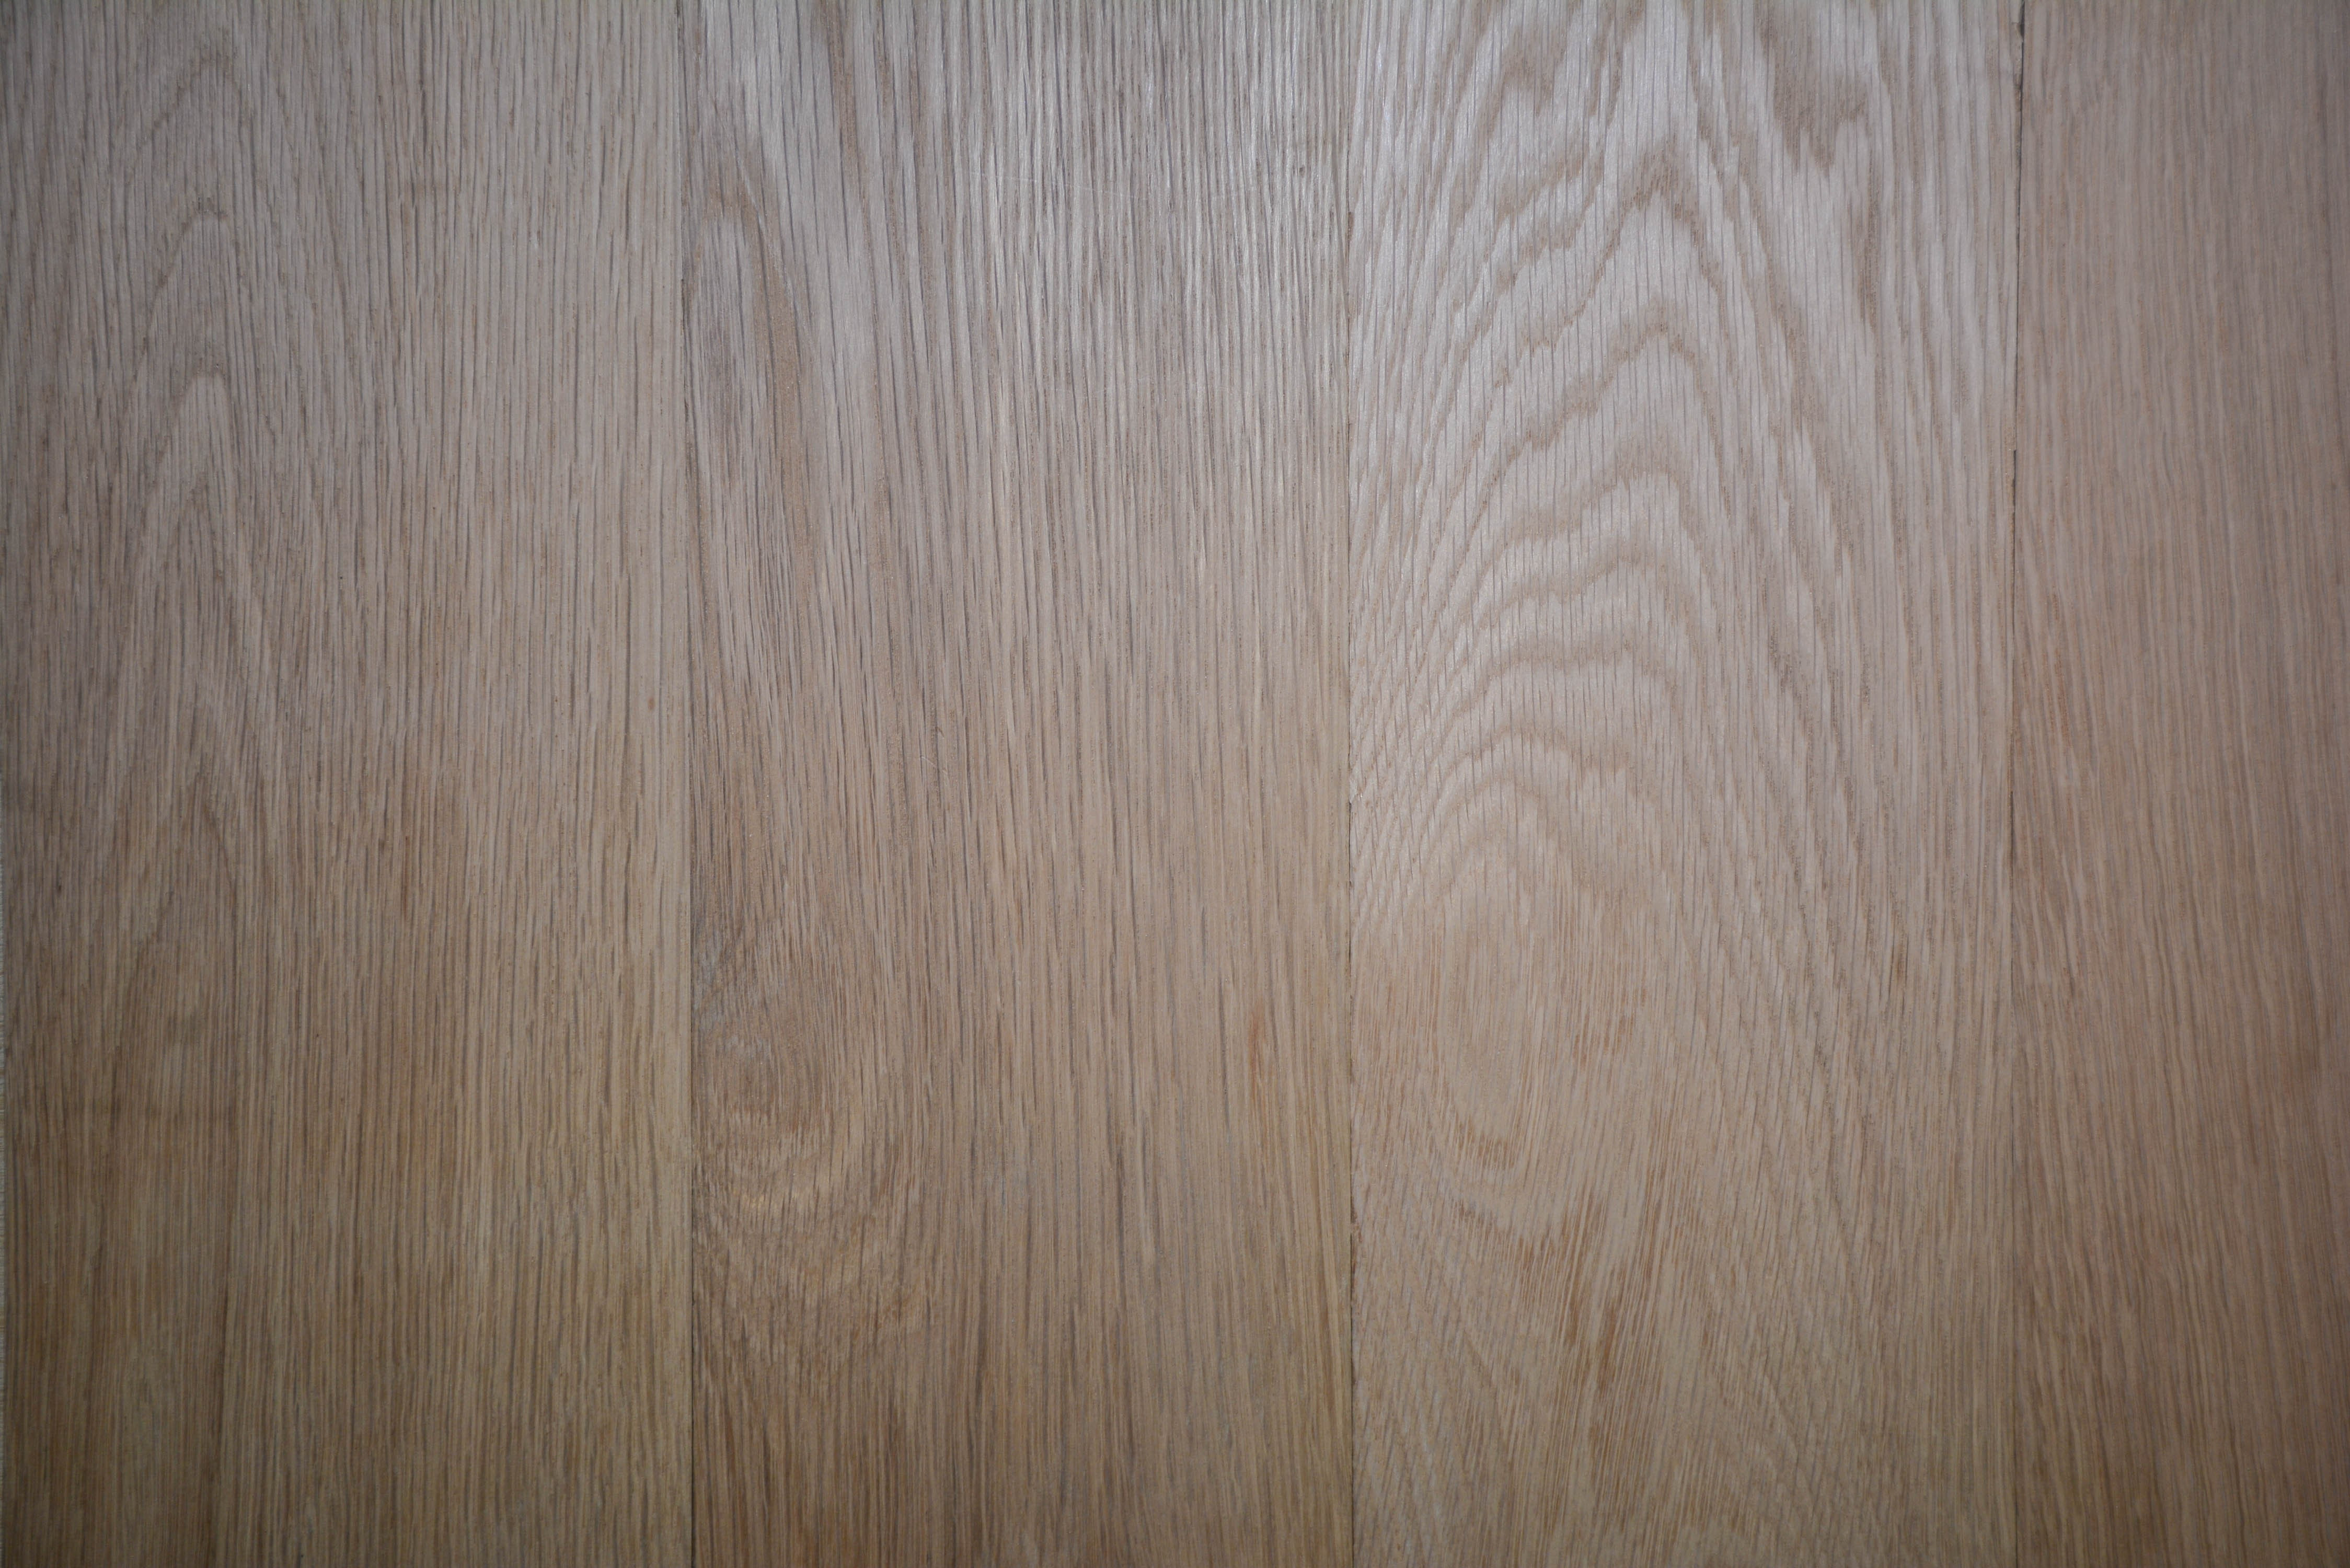 bruce oak saddle hardwood flooring of 15 elegant white oak hardwood flooring pictures dizpos com for white oak hardwood flooring best of select better pics of 15 elegant white oak hardwood flooring